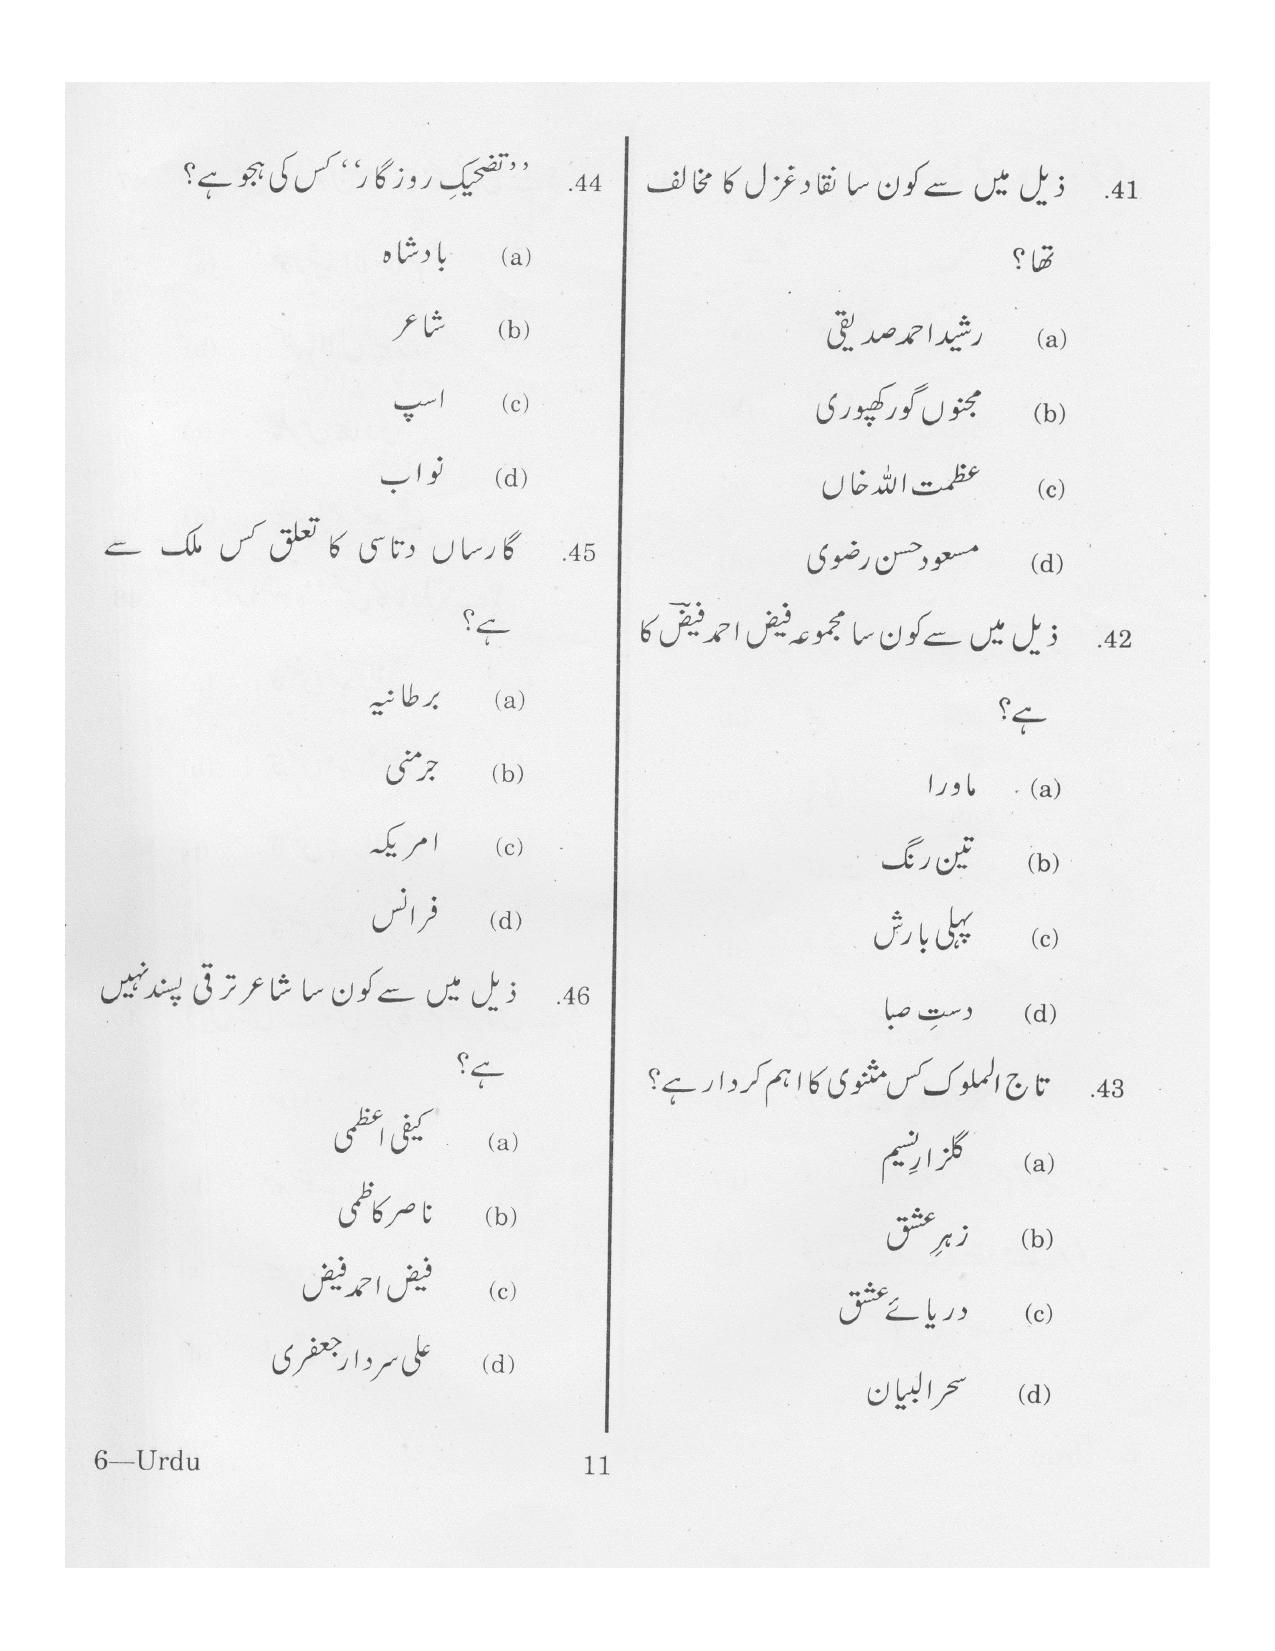 URATPG Urdu 2013 Question Paper - Page 10